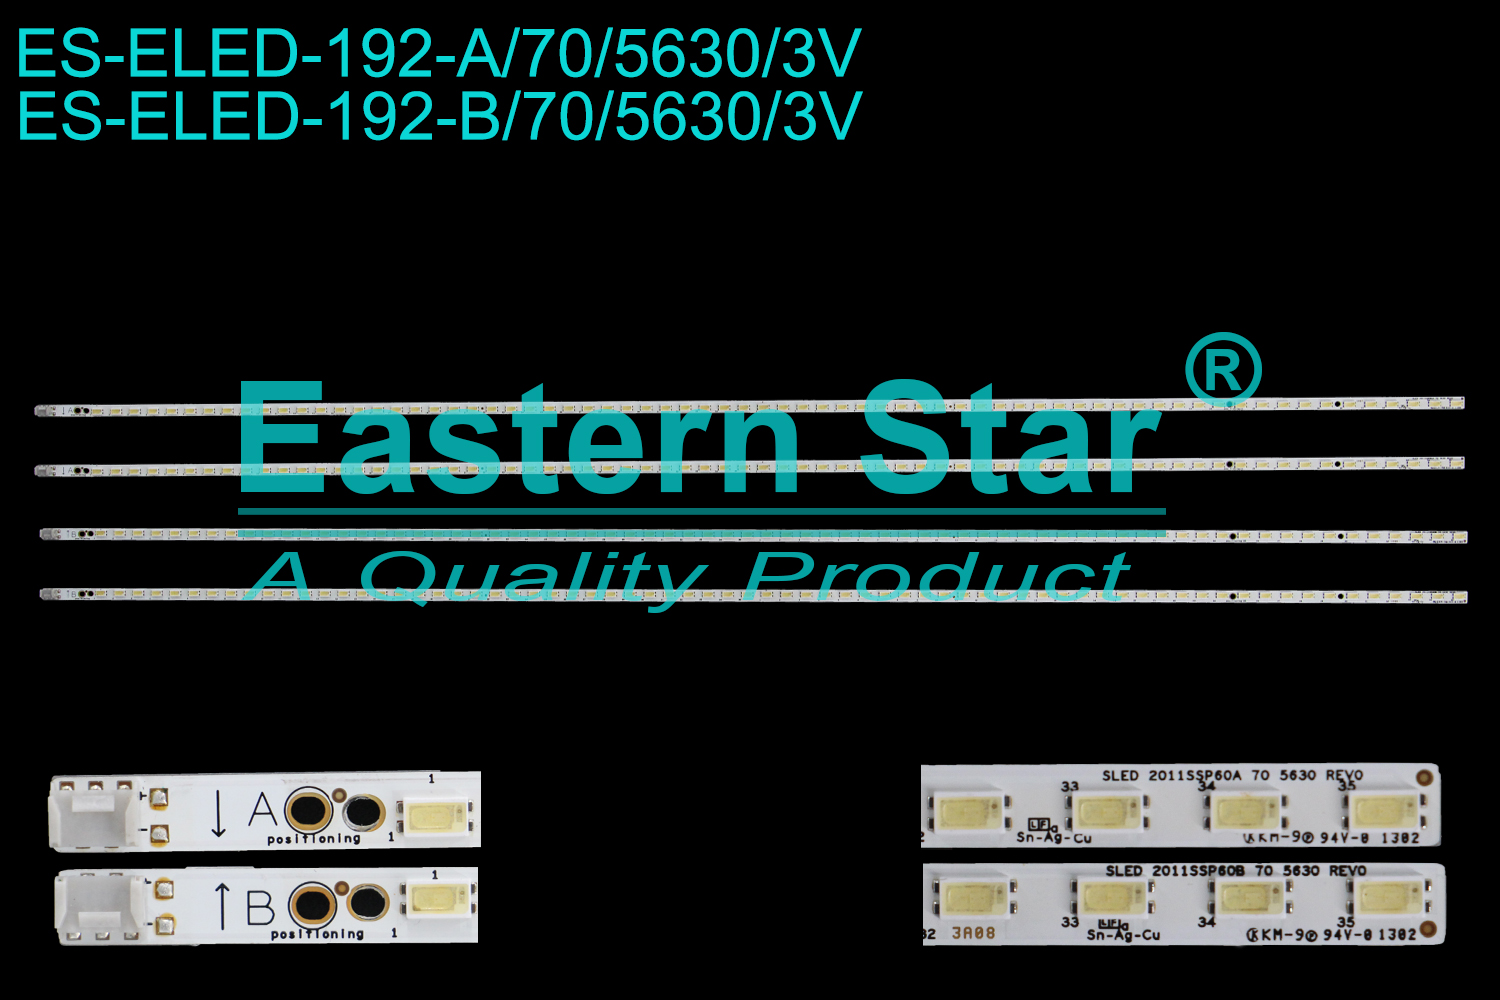 ES-ELED-192 ELED/EDGE TV backlight use for 60'' Sharp LCD-60LX840A SLED 2011SSP60A/B 70 5630 REV0 200515 LED STRIPS(4)